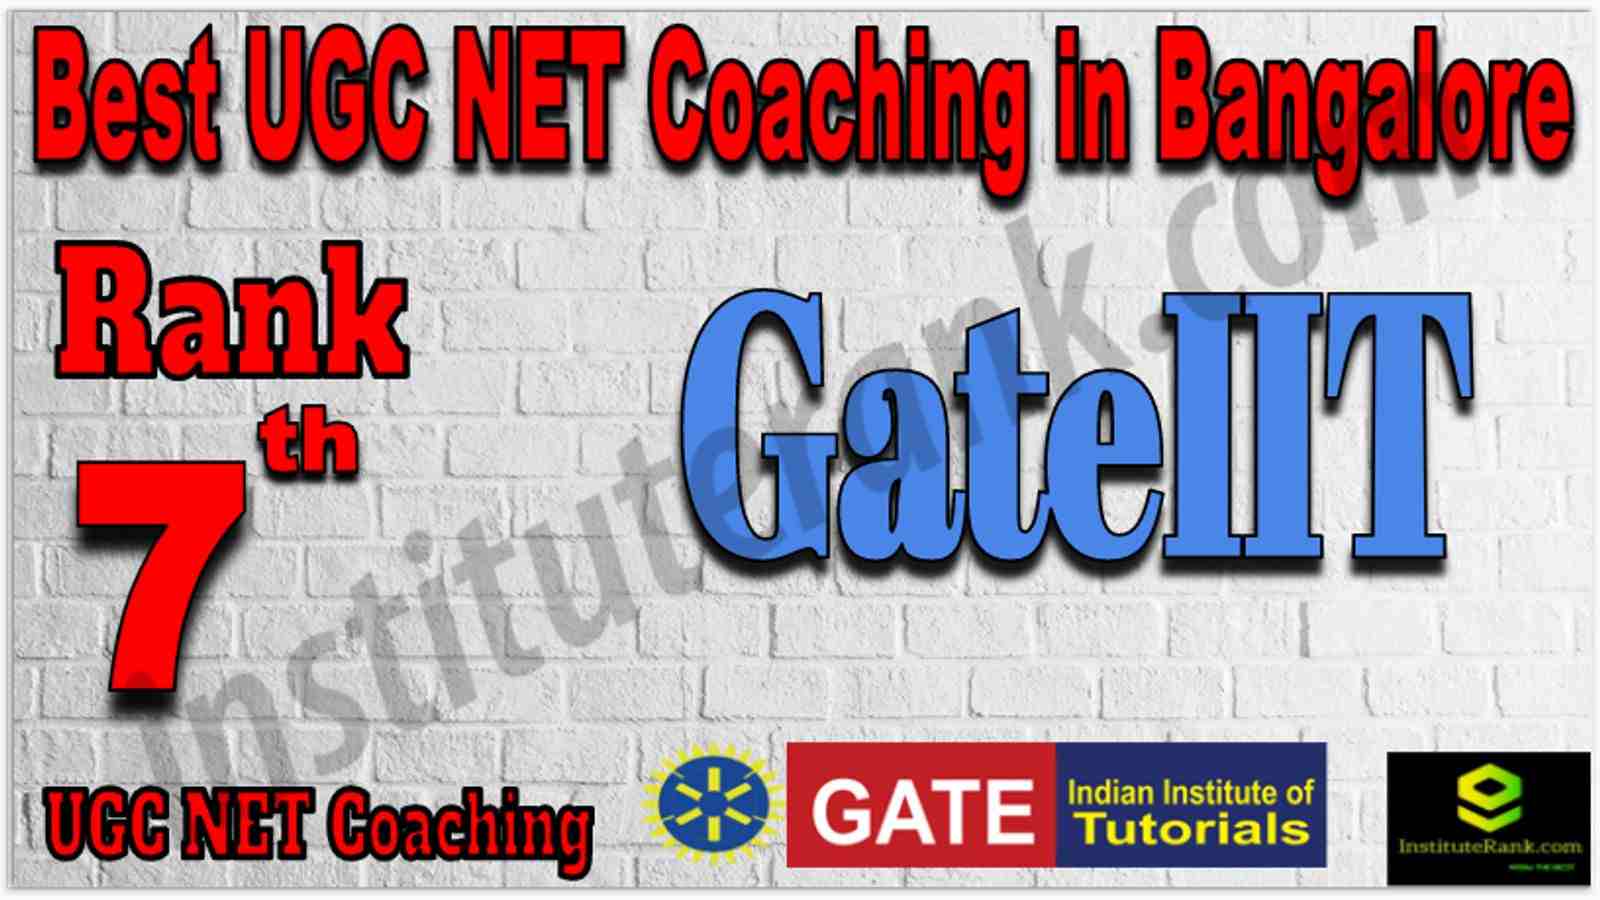 Rank 7 Best UGC NET Coaching in Bangalore